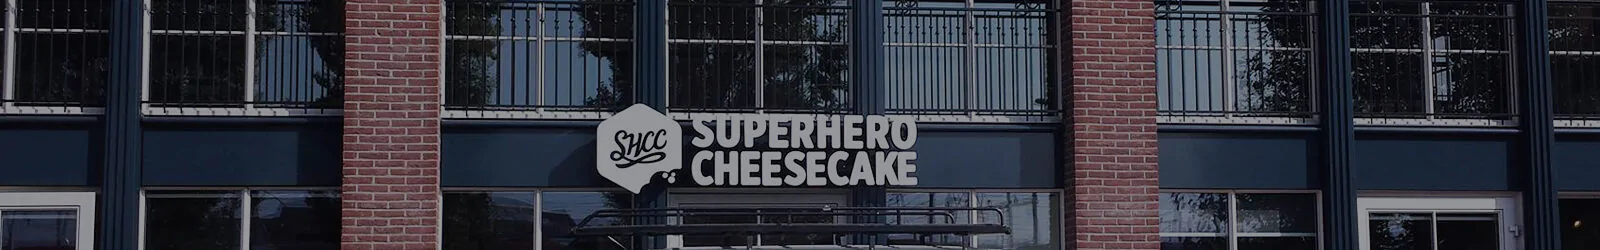 superhero cheesecake head